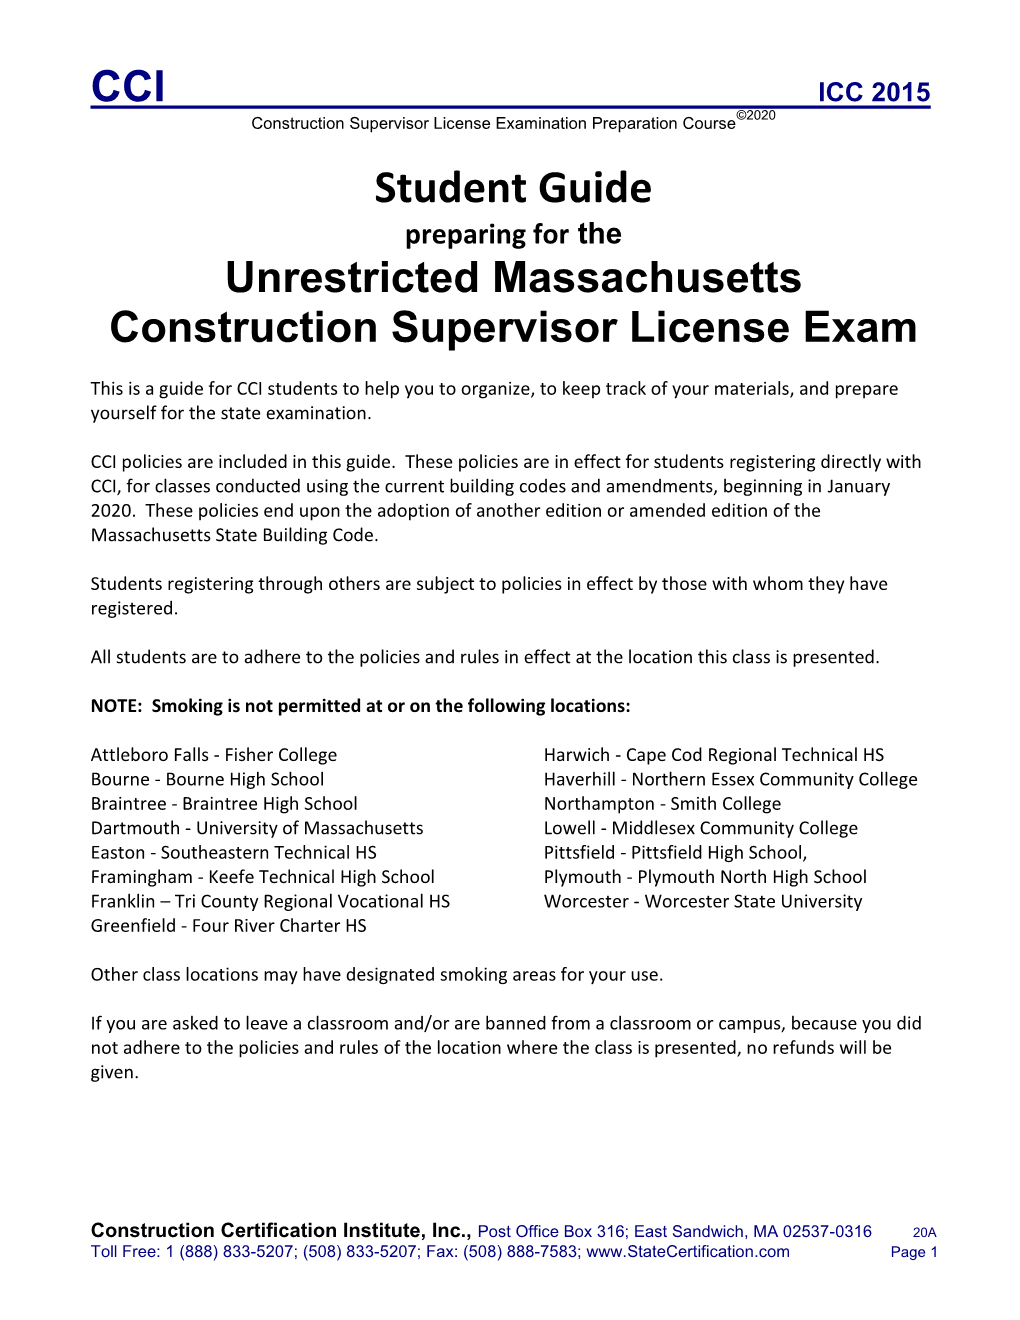 Student Guide Preparing for the Unrestricted Massachusetts Construction Supervisor License Exam